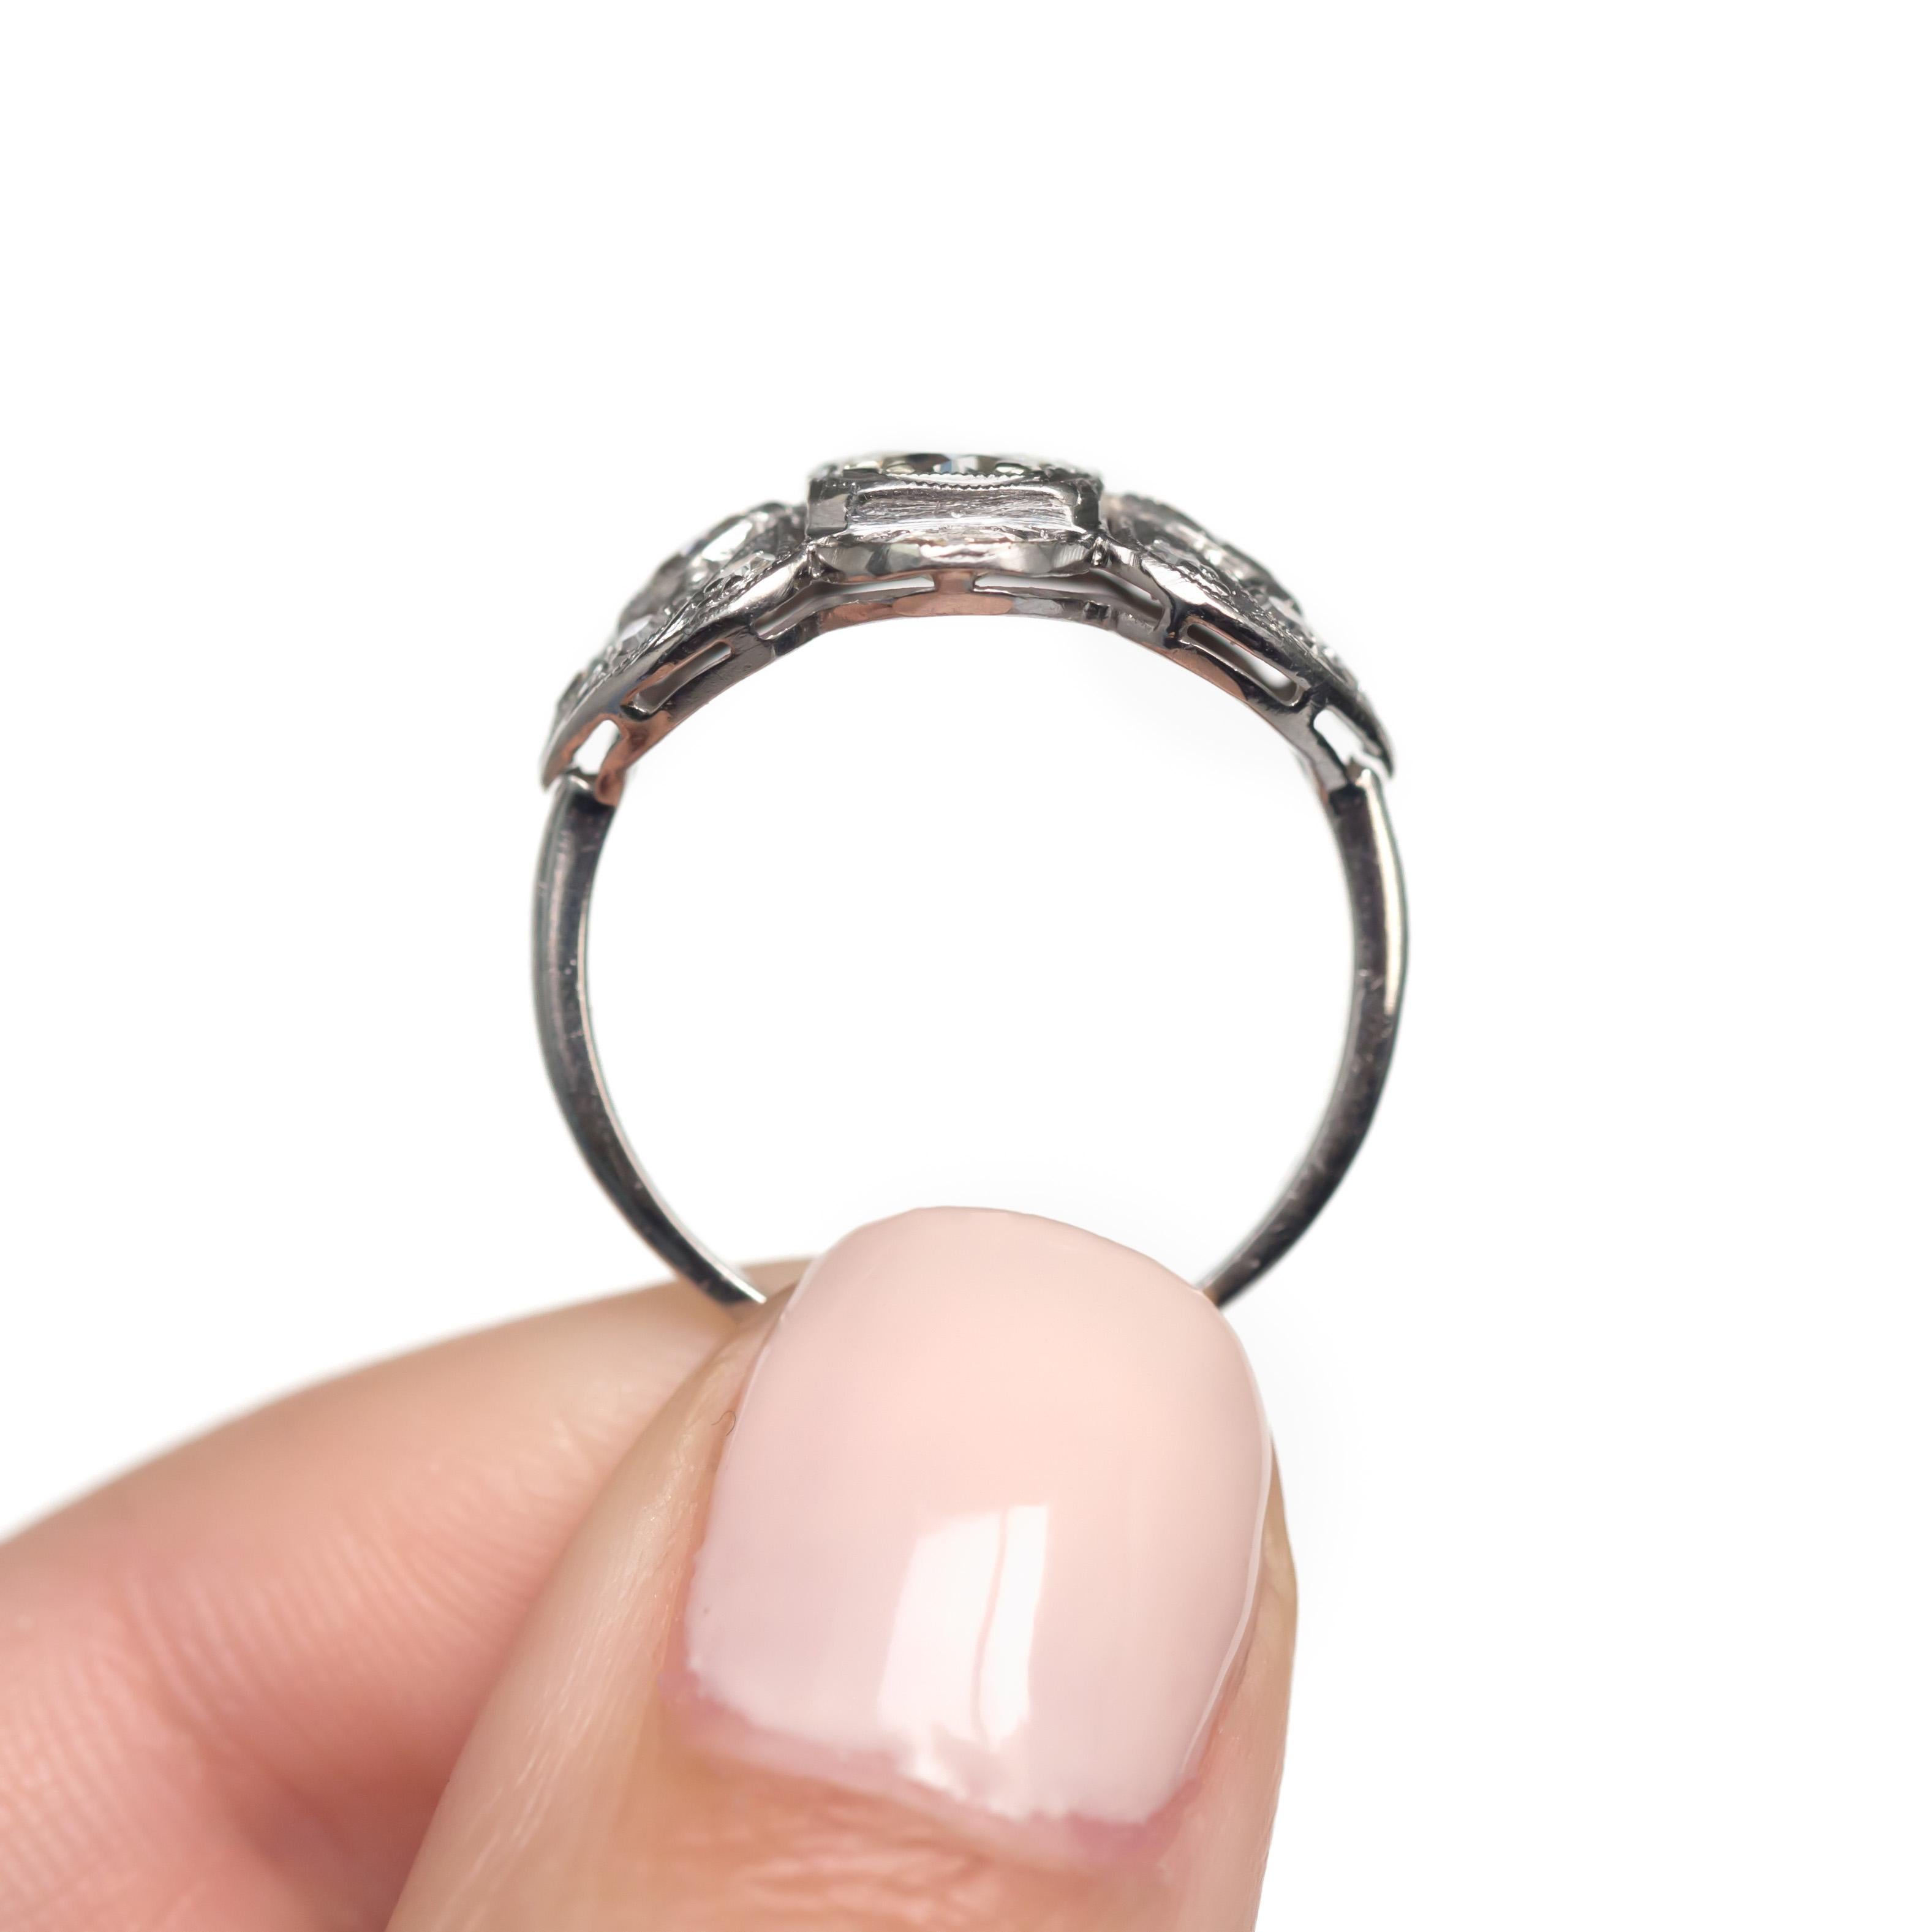 50 carat diamond ring